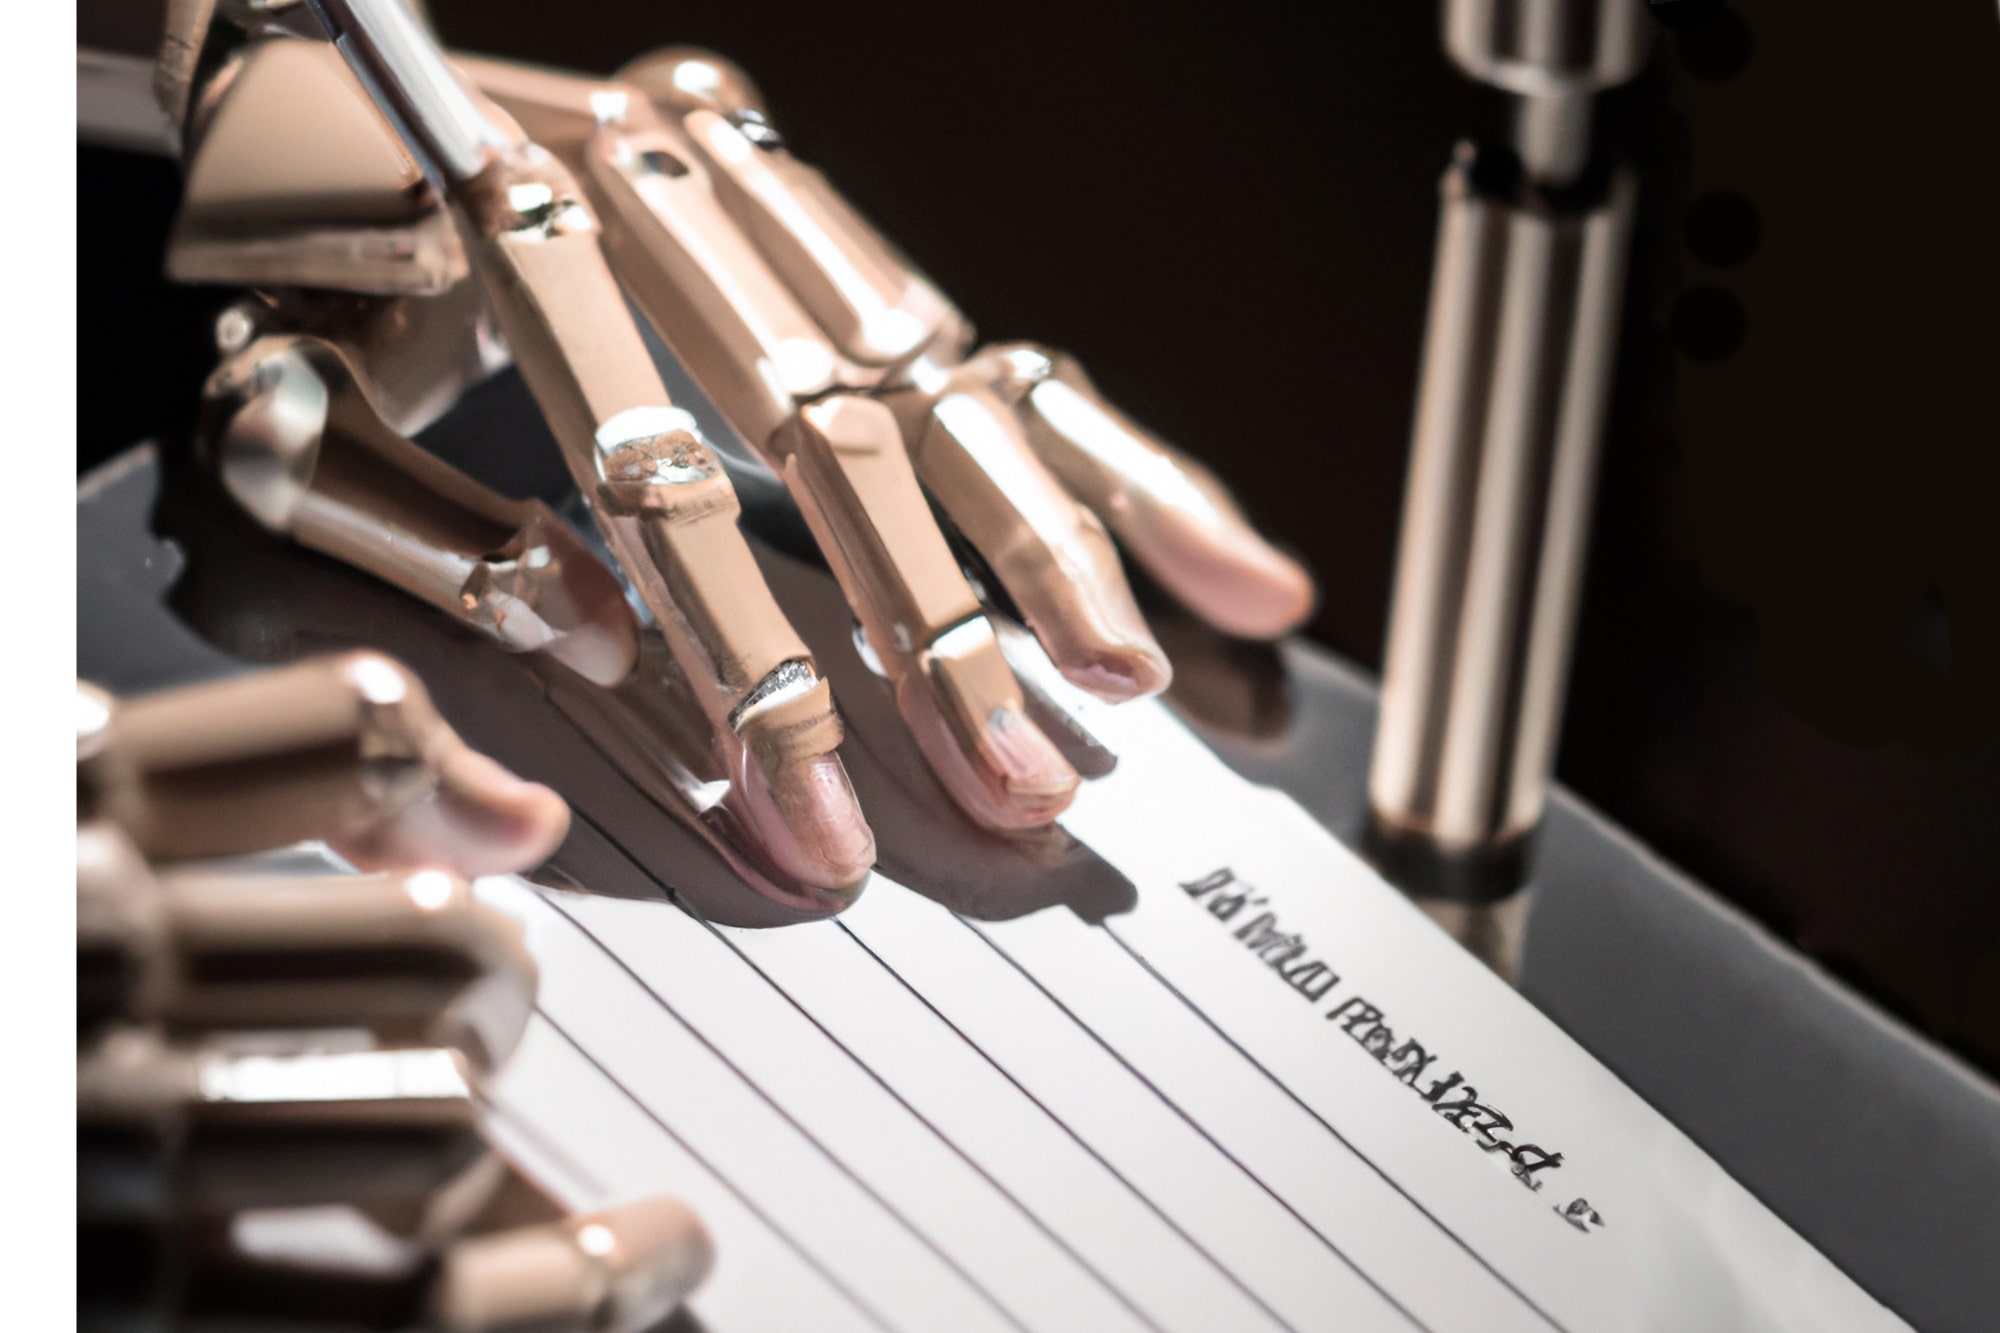 Una creación de Dall-E de un robot escribiendo un documento.